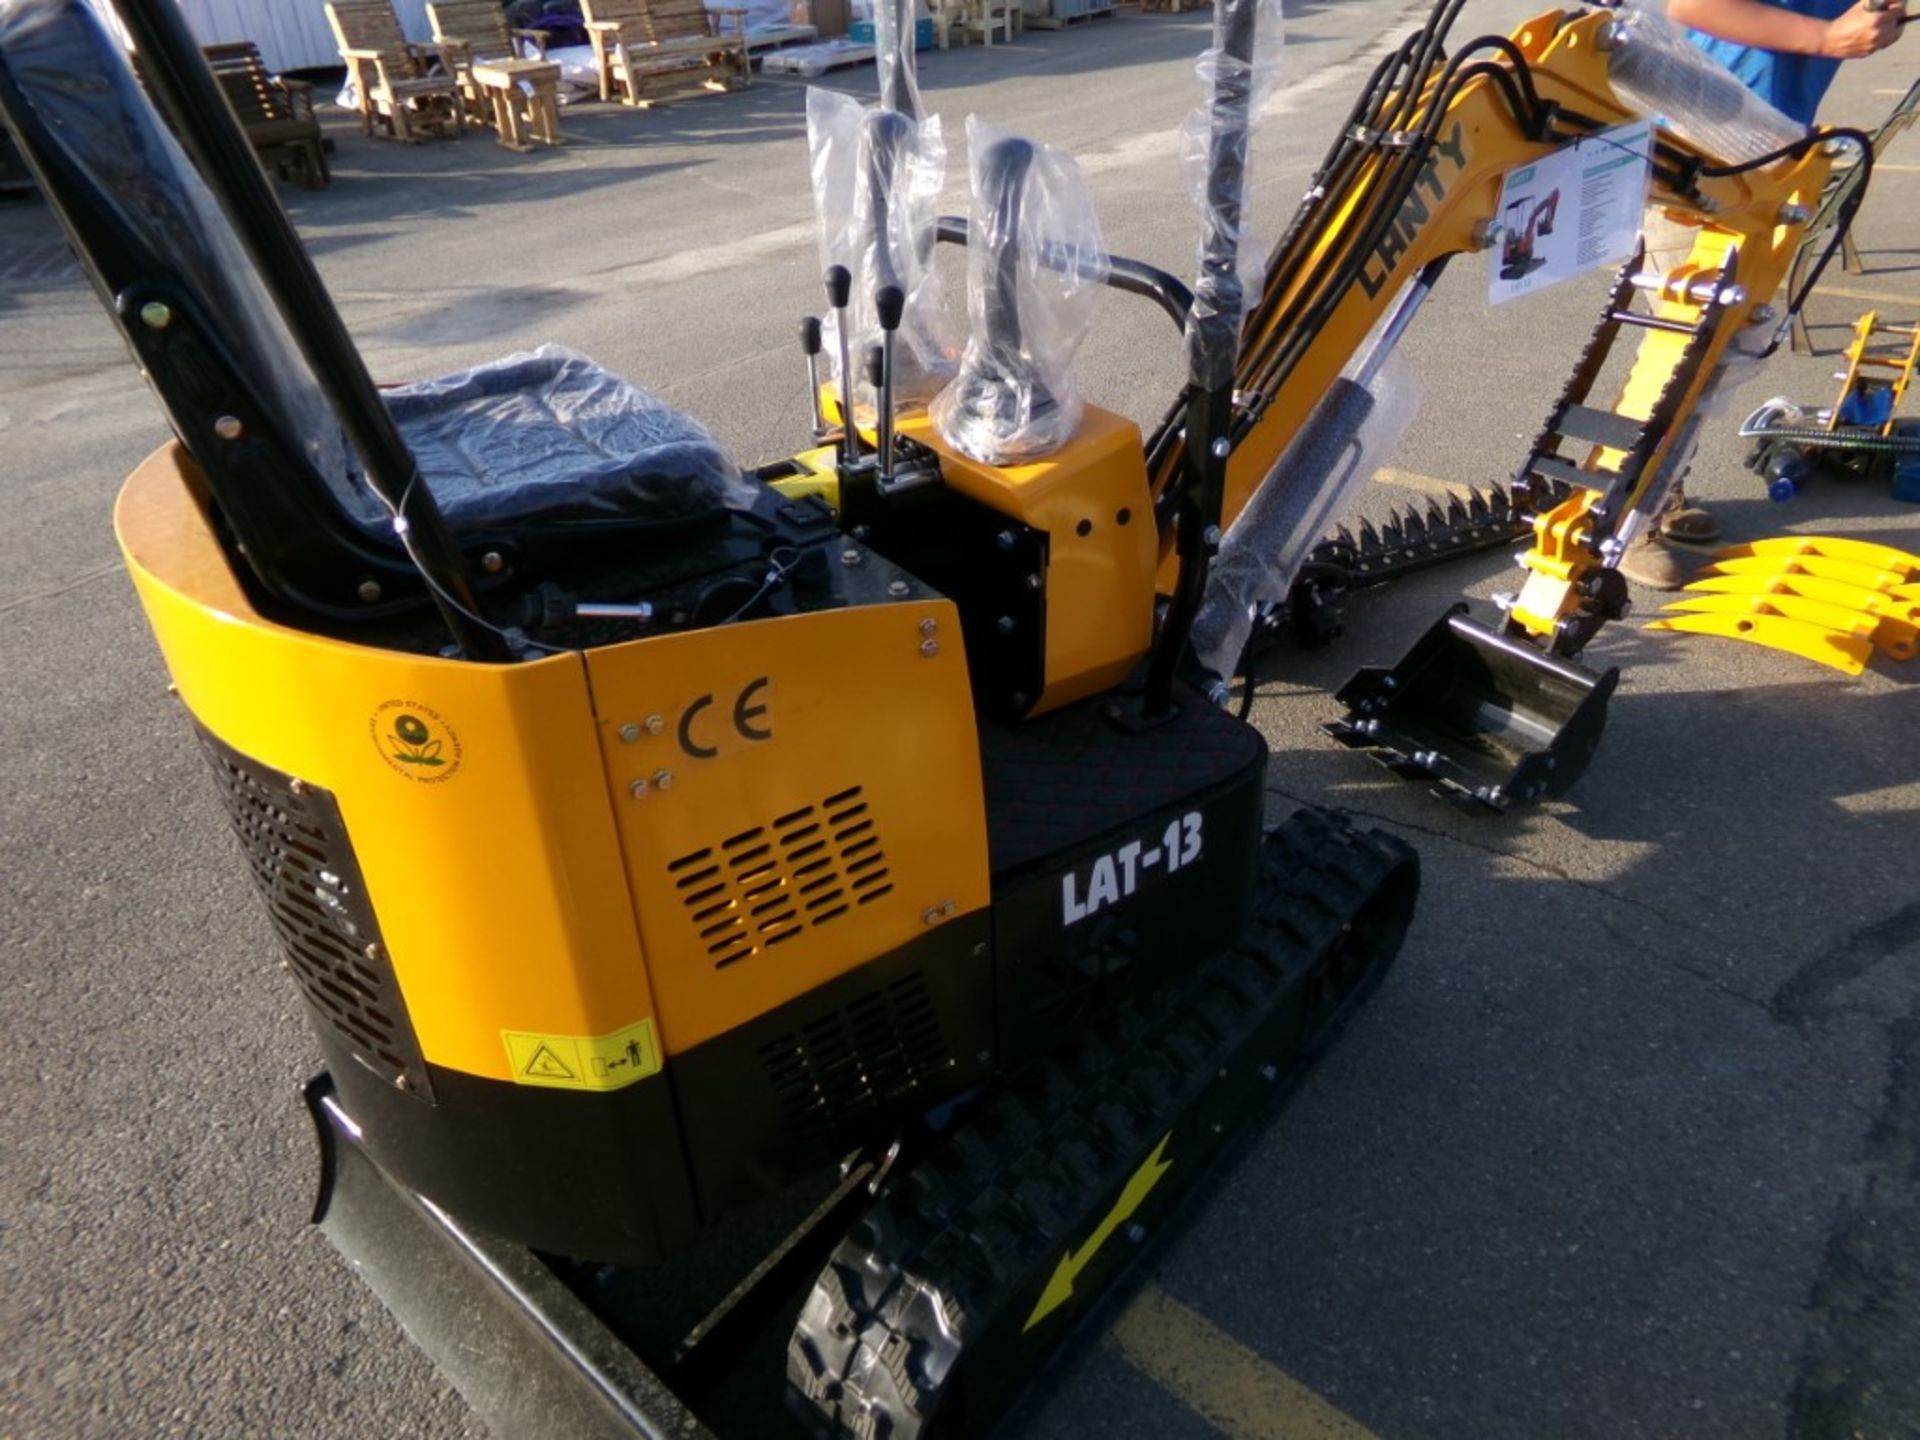 New Mini Excavator, Lanty LAT13, Yellow, Ser. 240271 (4673) - Image 2 of 2